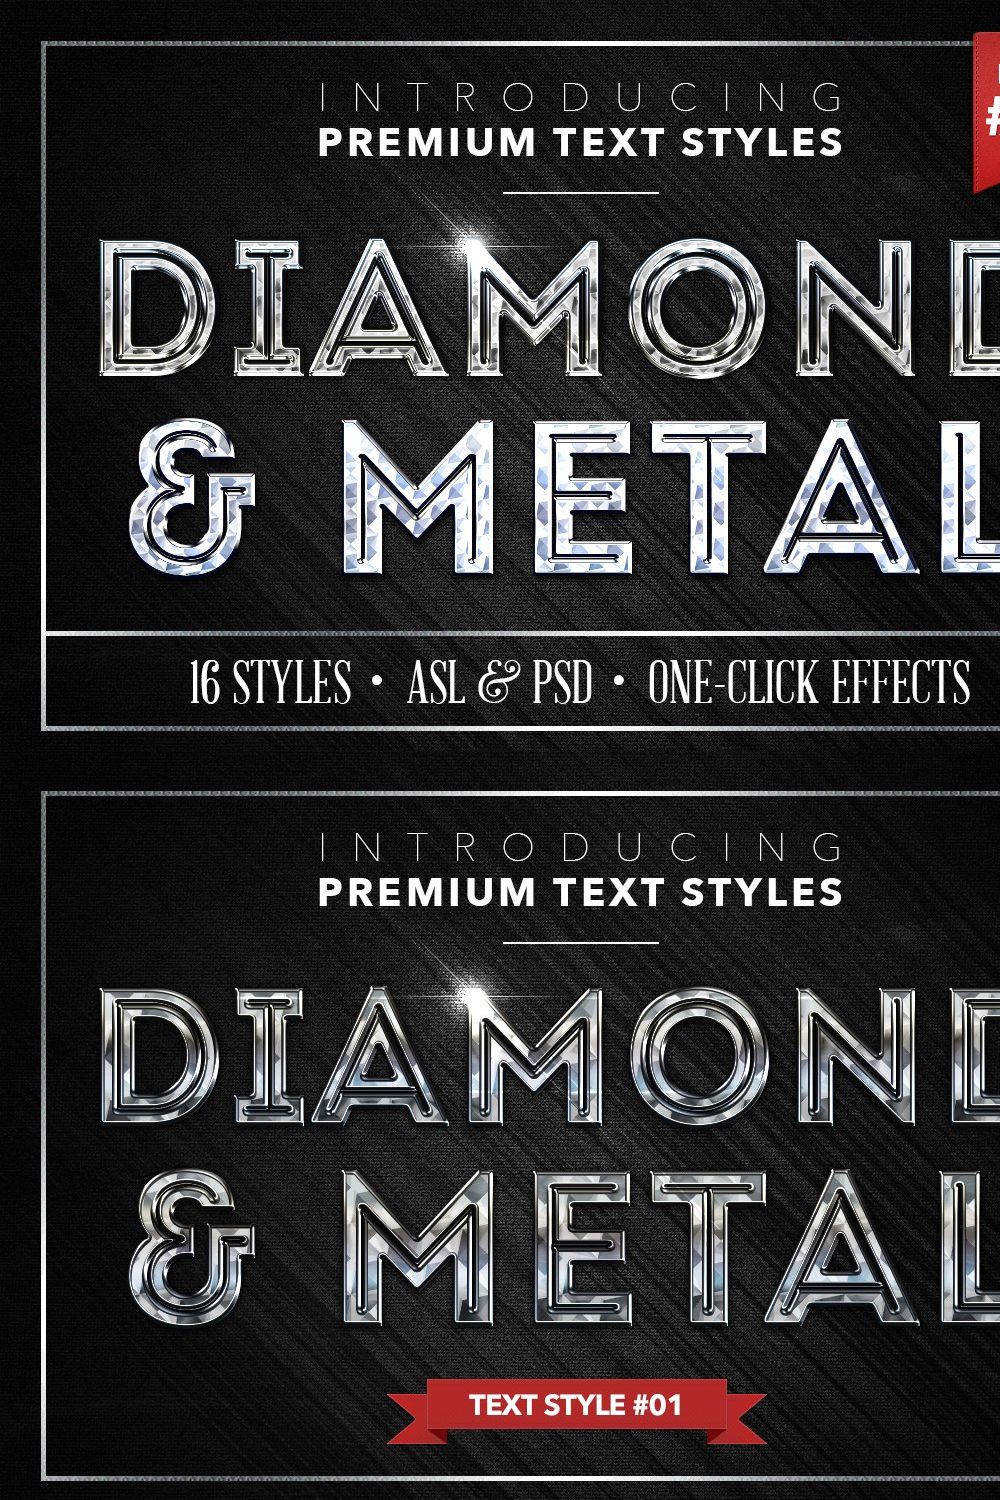 Diamond & Metal #2 - 16 Text Styles pinterest preview image.